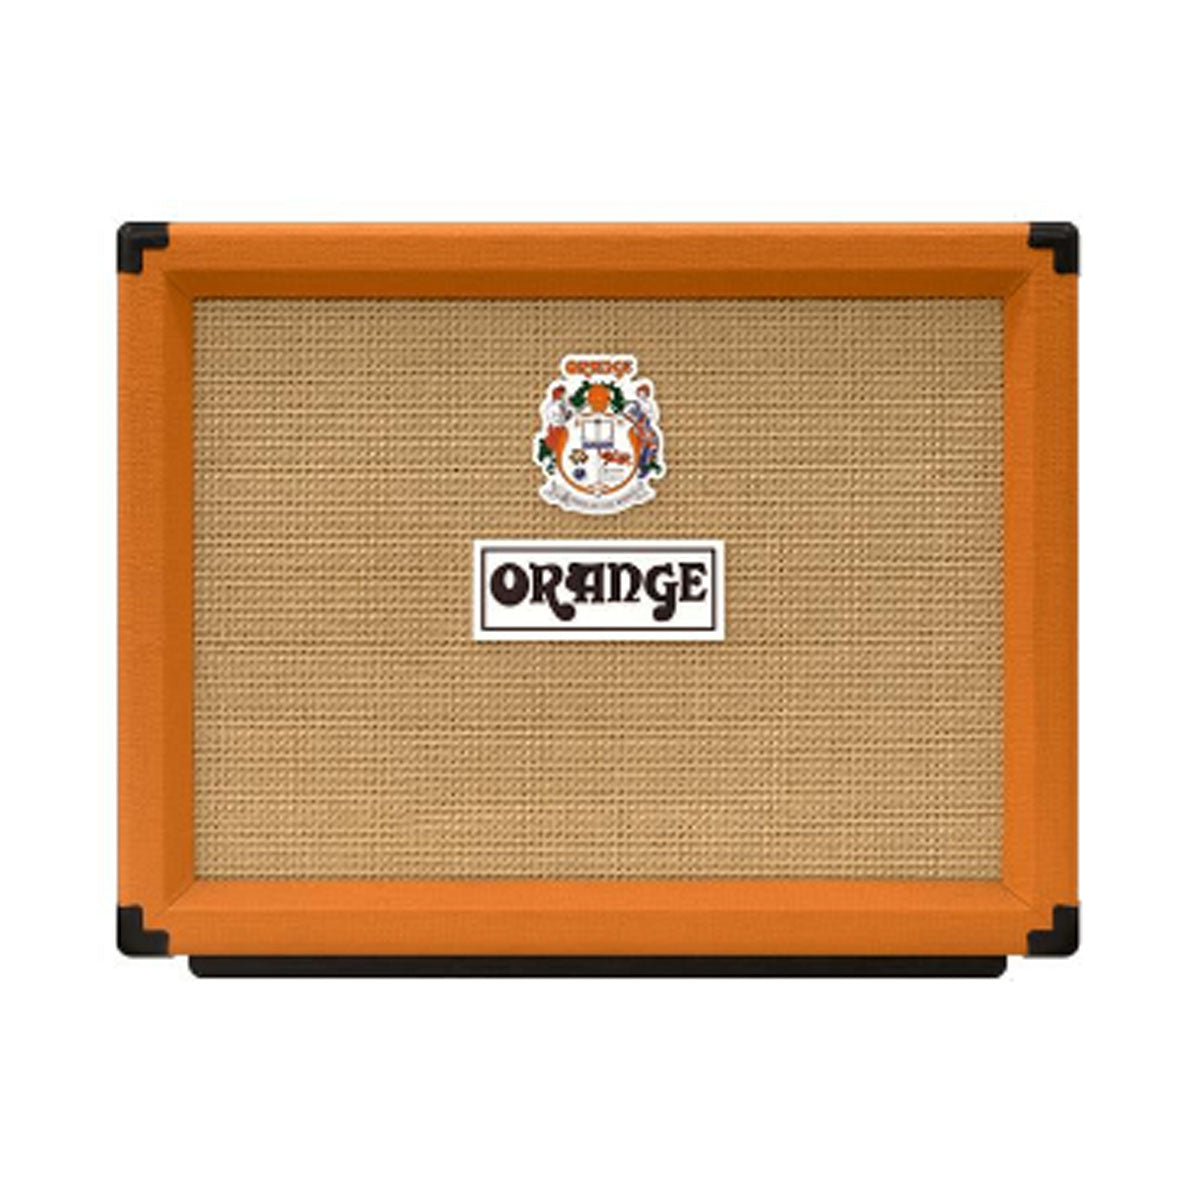 Orange Tremlord Guitar Amplifier 30w Combo Amp